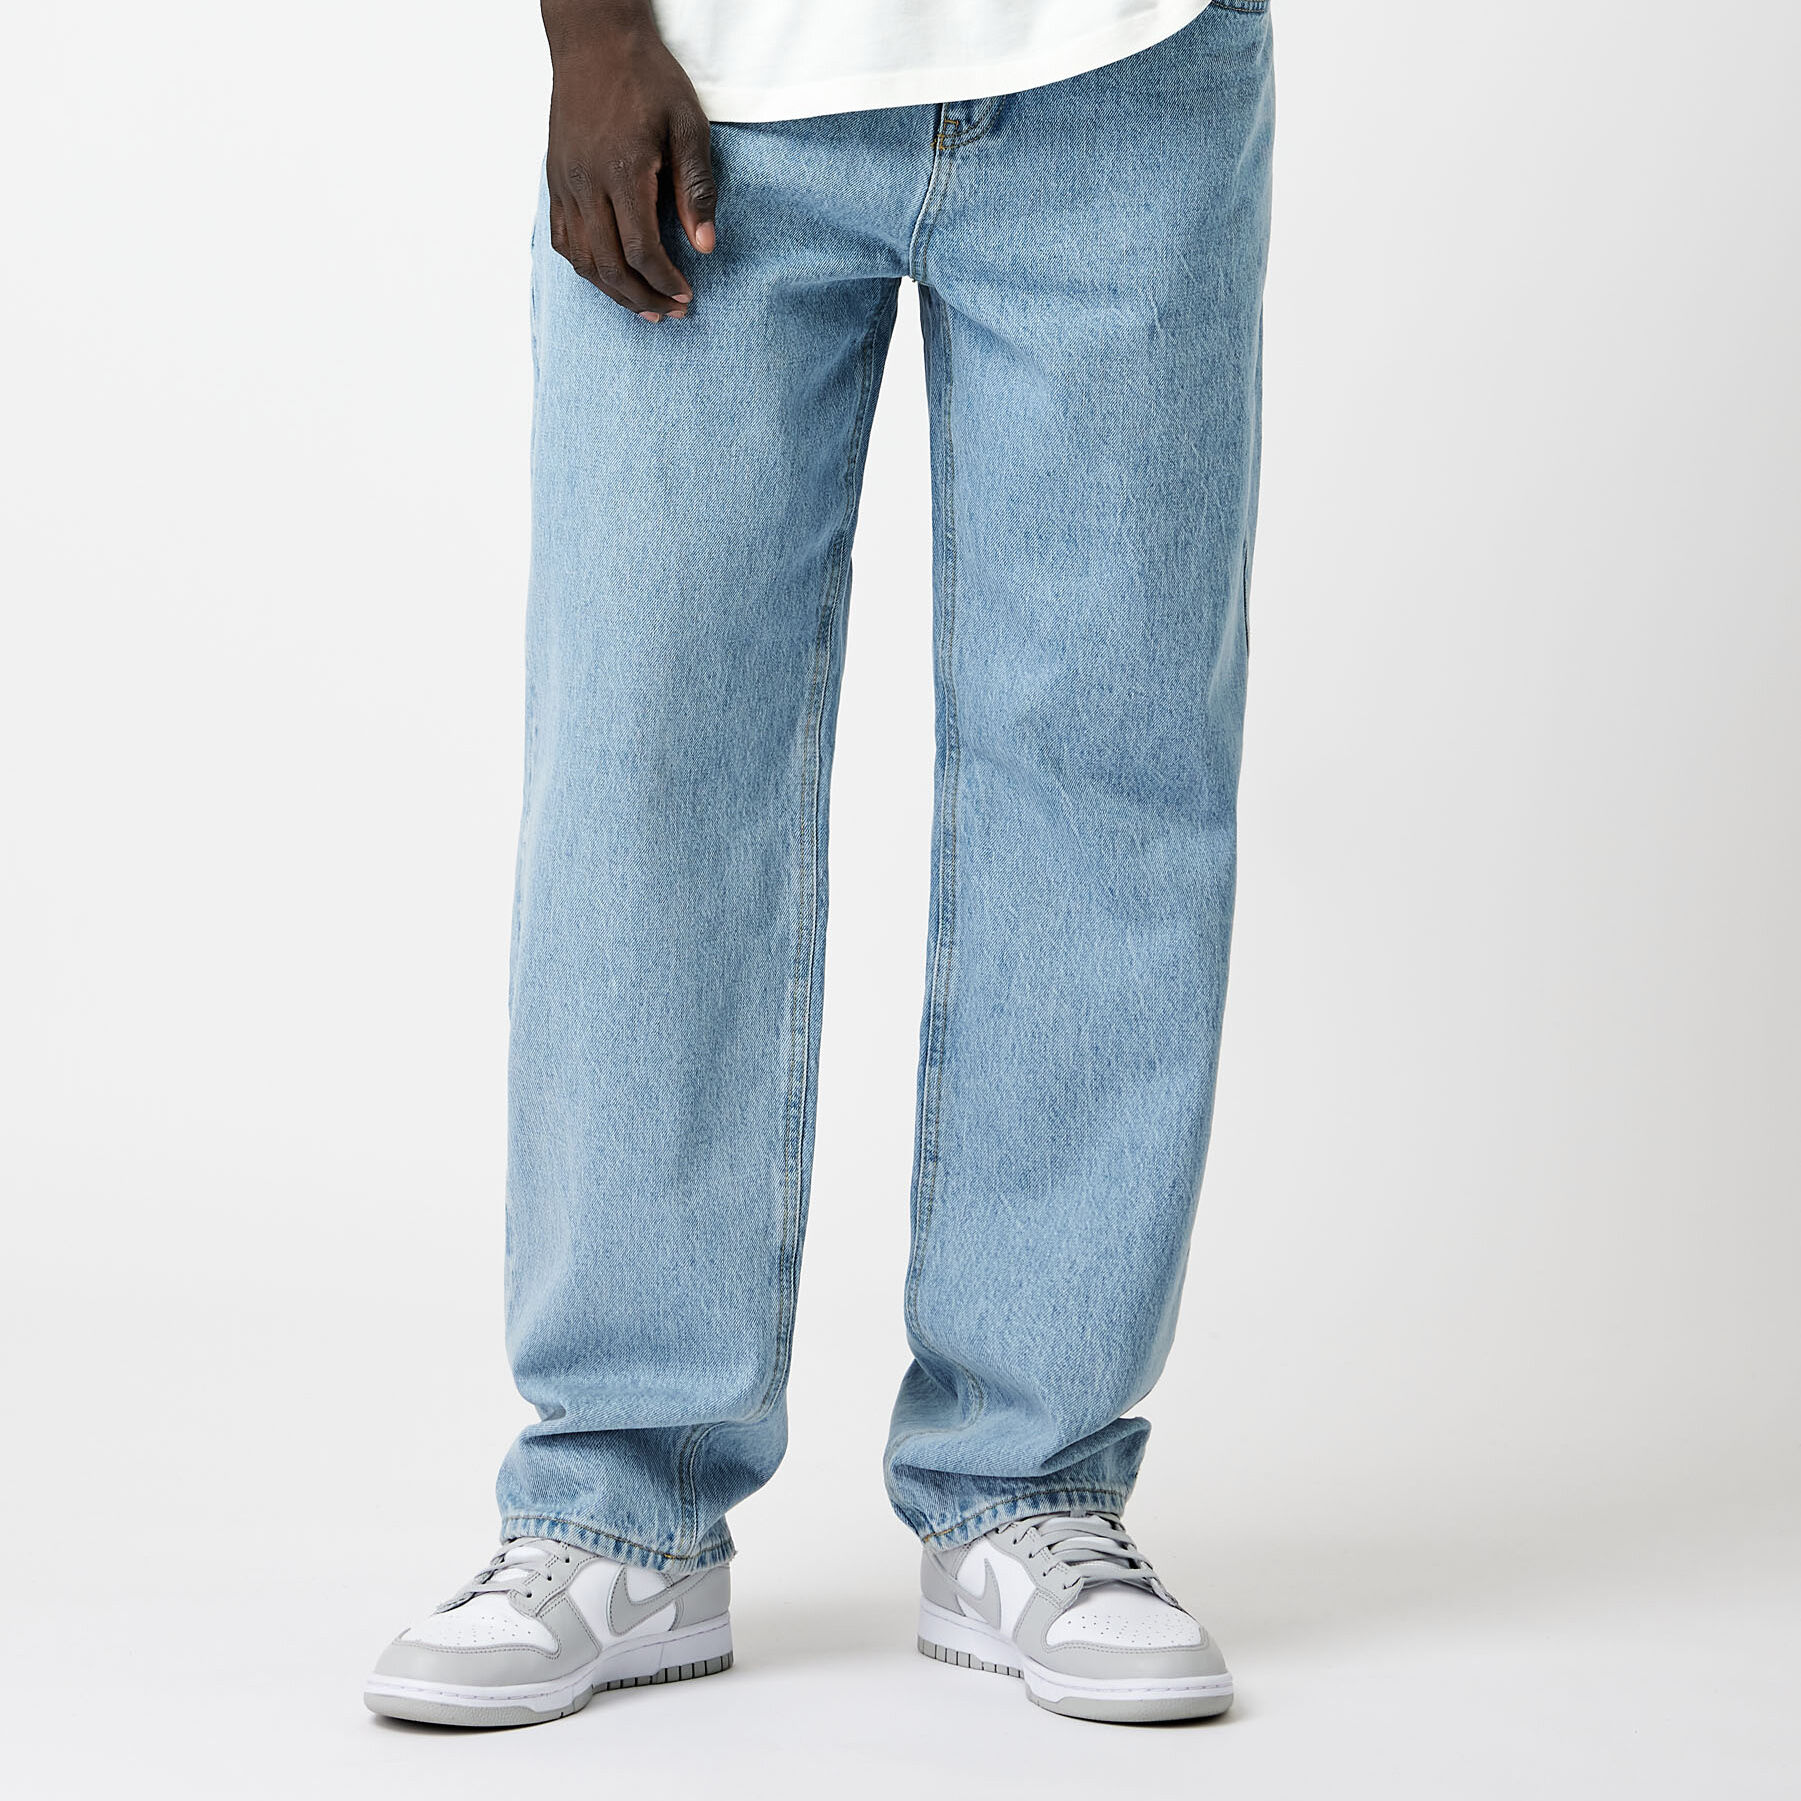 jordan 1 with baggy jeans